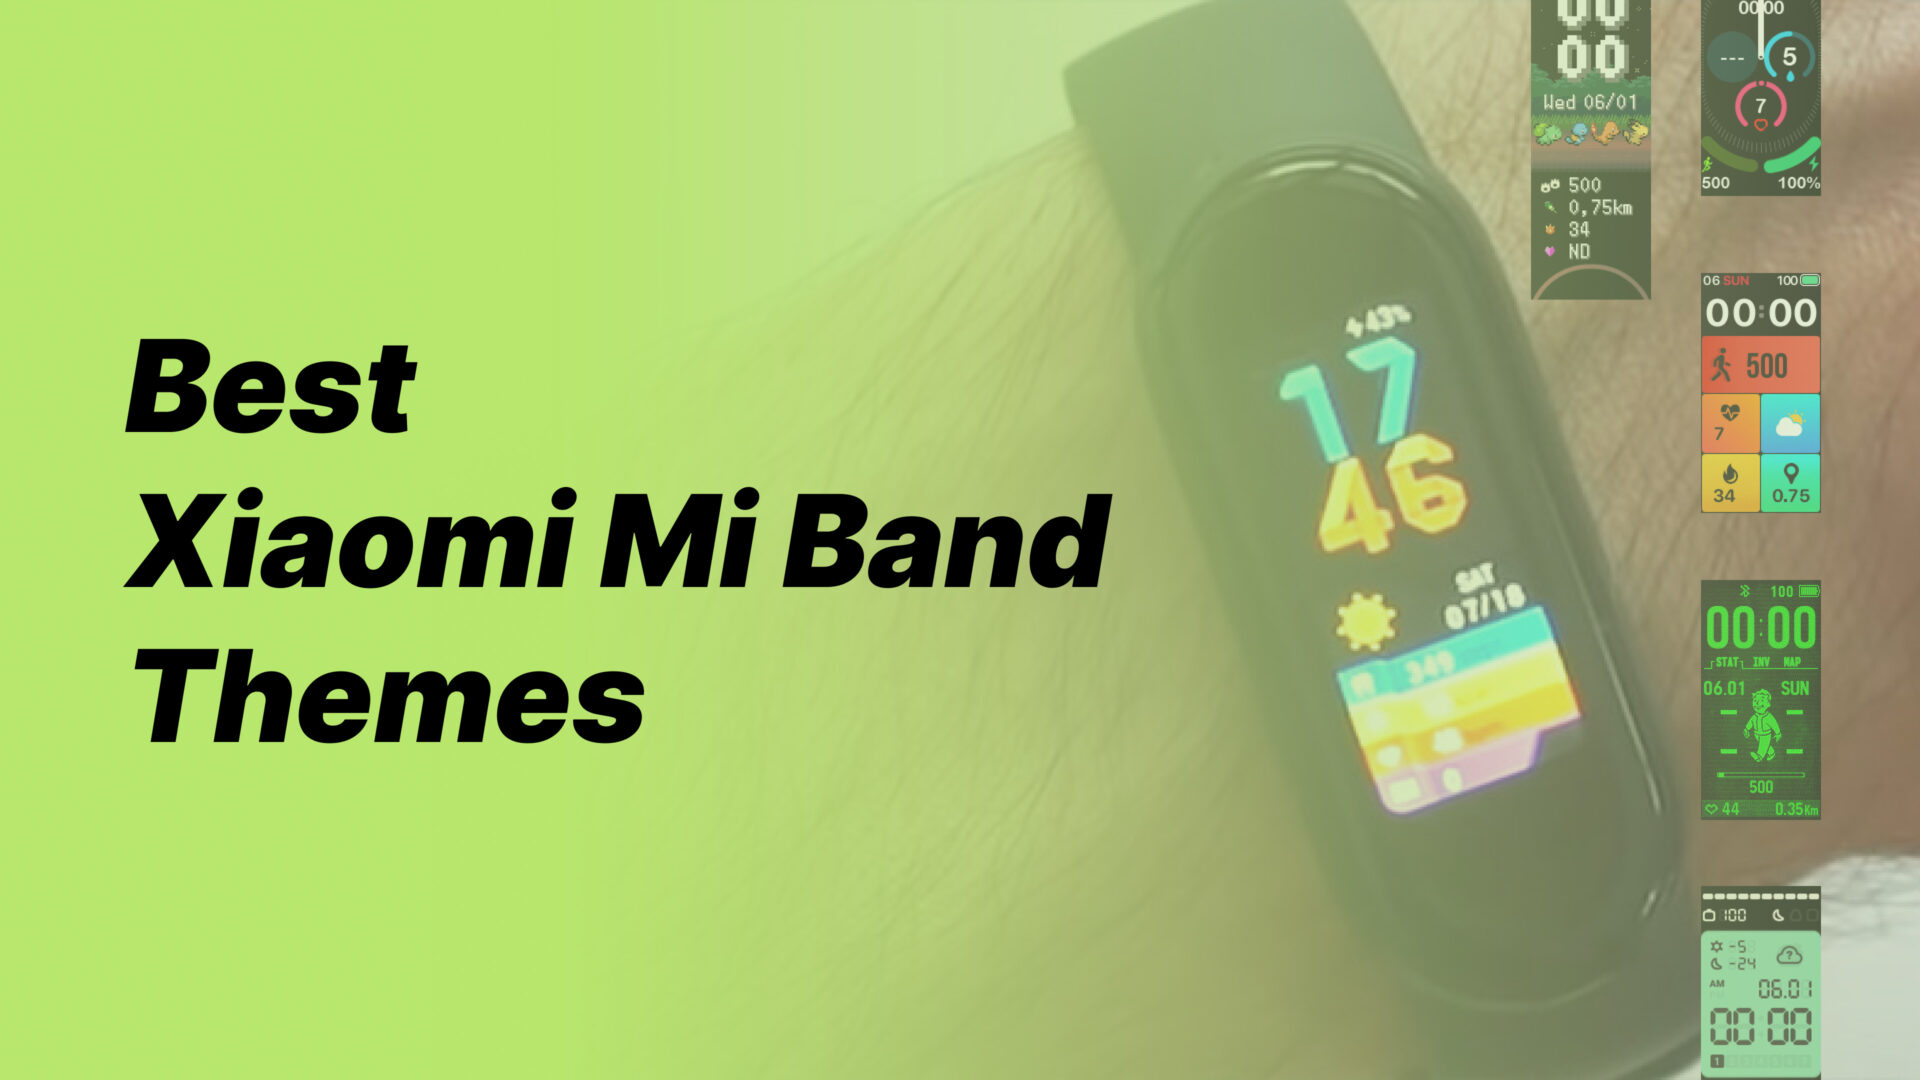 Xiaomi Mi Band 4 Review: Unbeatable Value - Tech Advisor